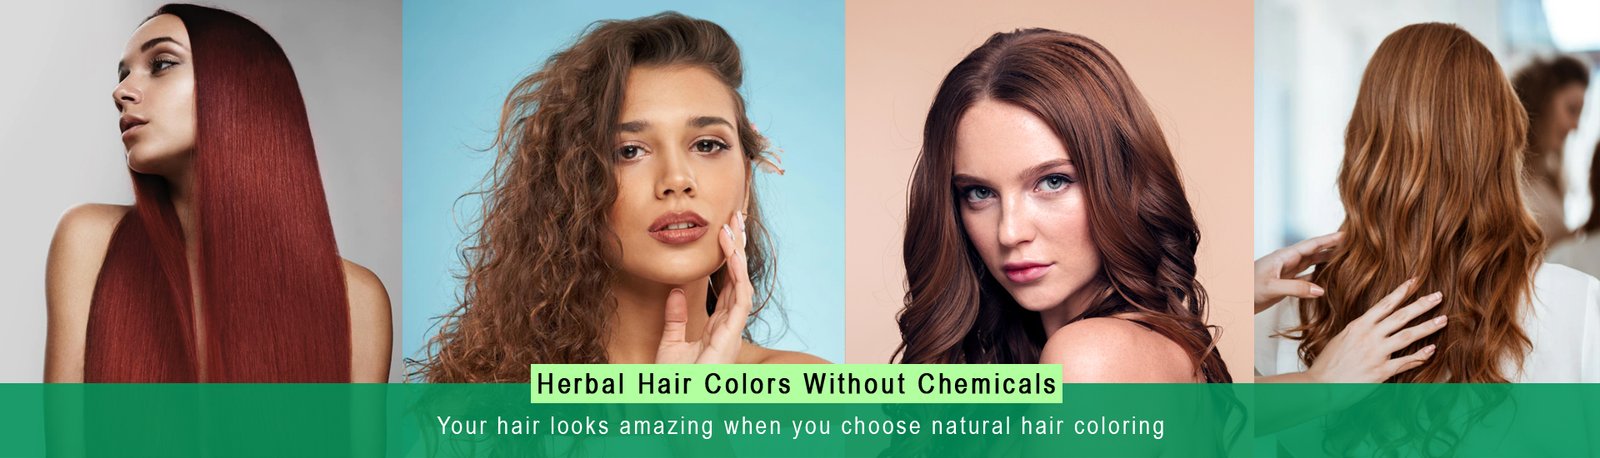 herbal hair colors manufacturer